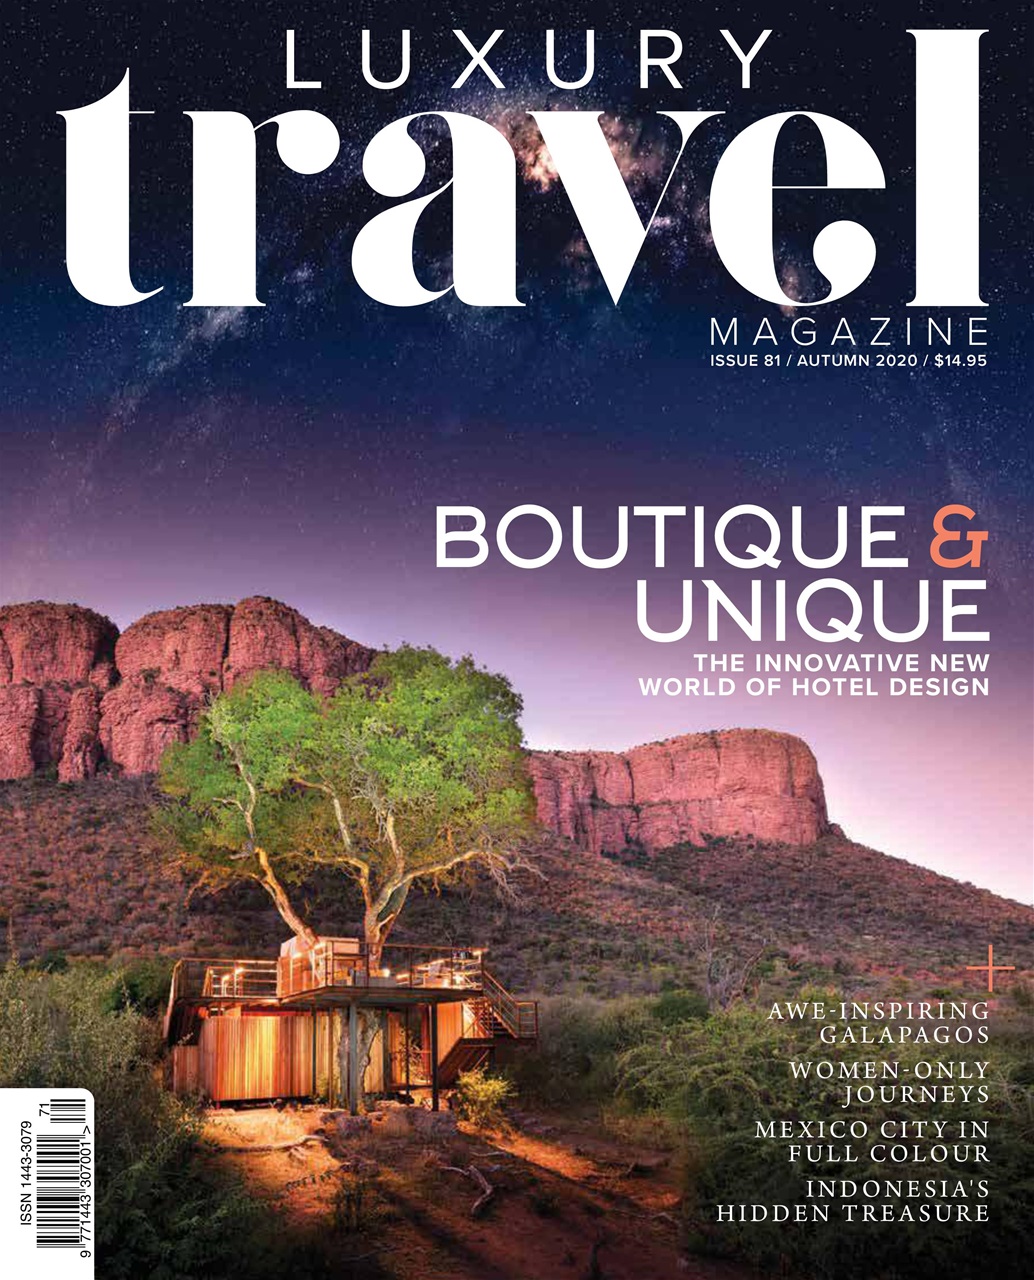 travel 360 magazine